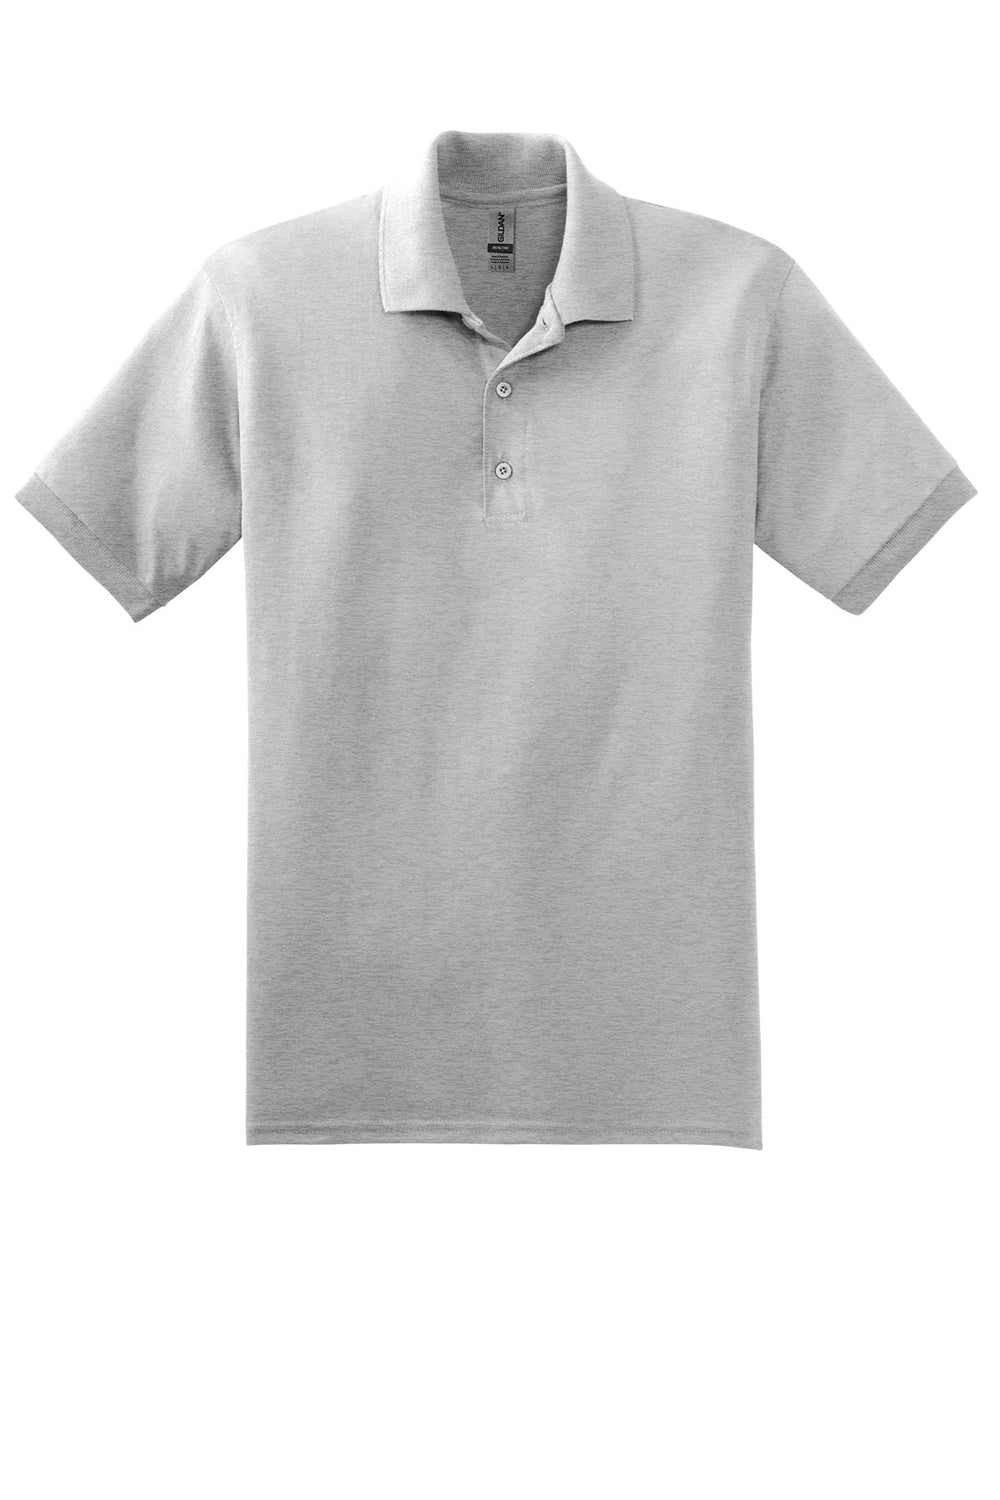 CCS - 8800 Gildan DryBlend Unisex Adult 6-Ounce Jersey Knit Sport Shirt - Premium School Uniform from Pat's Monograms - Just $18! Shop now at Pat's Monograms